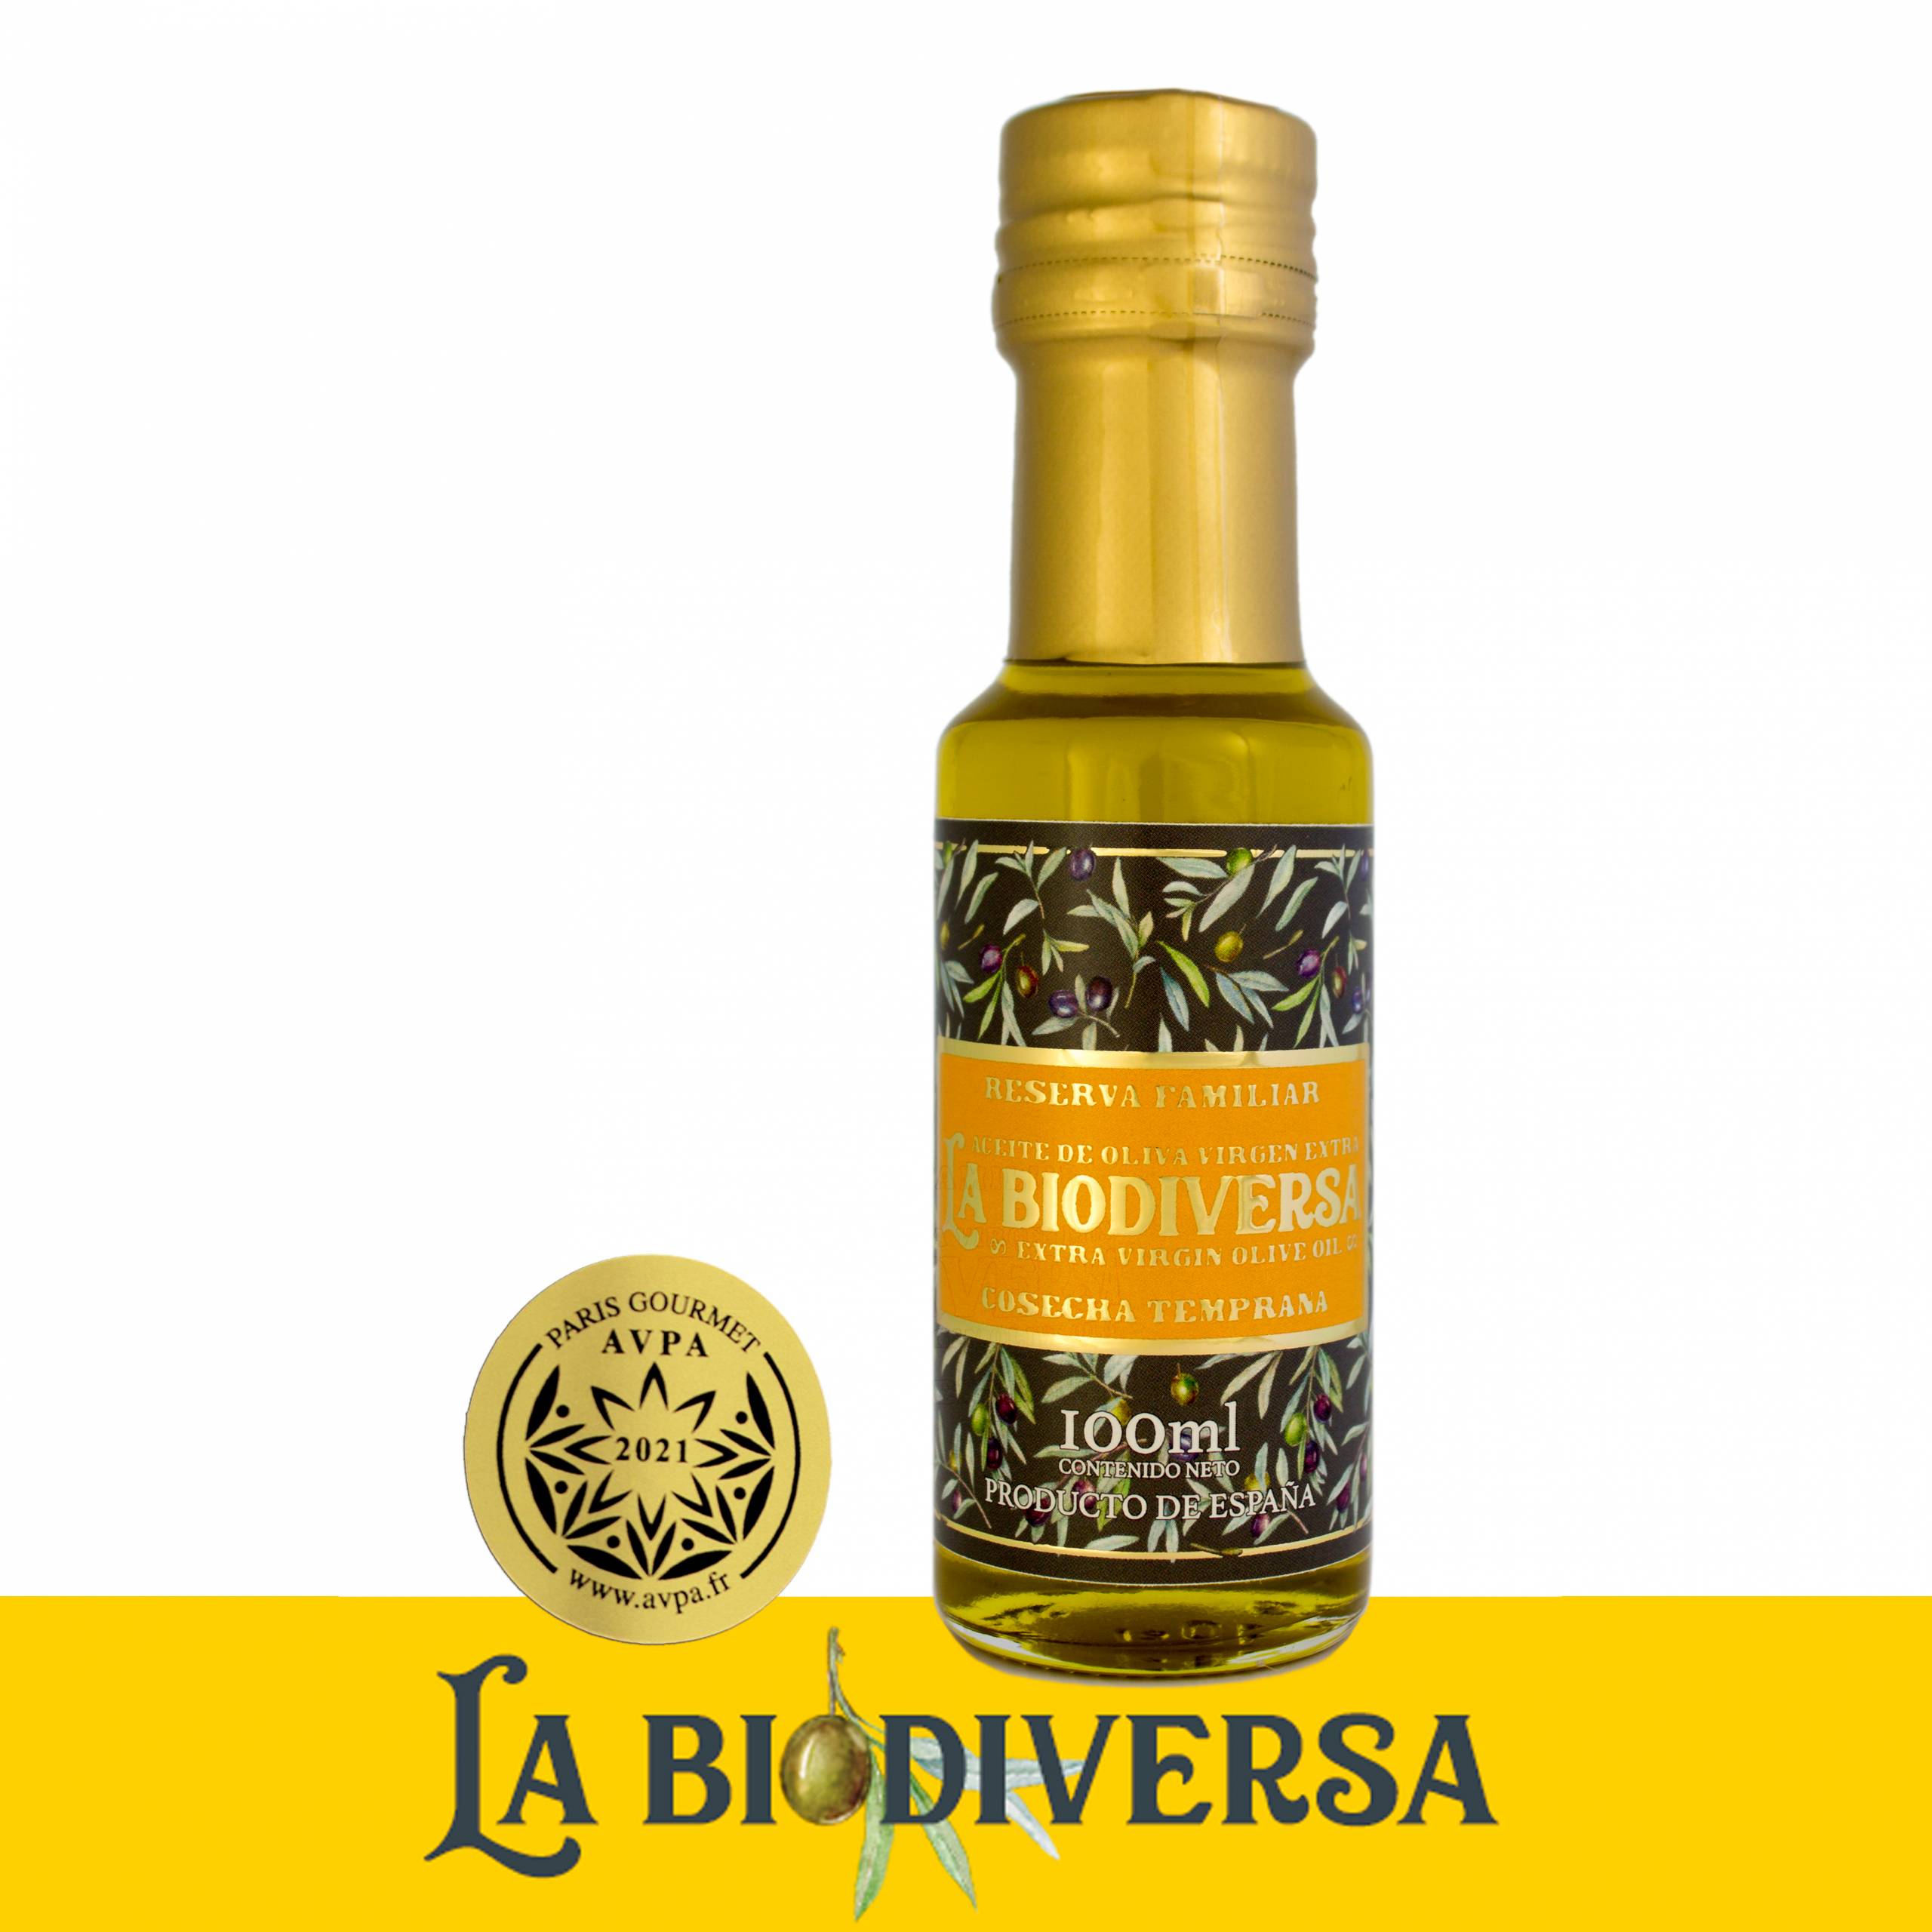 La-biodiversa.-Aciete-de-oliva-virgen-extra.-Botella-100mL-Logo-y-sello-scaled